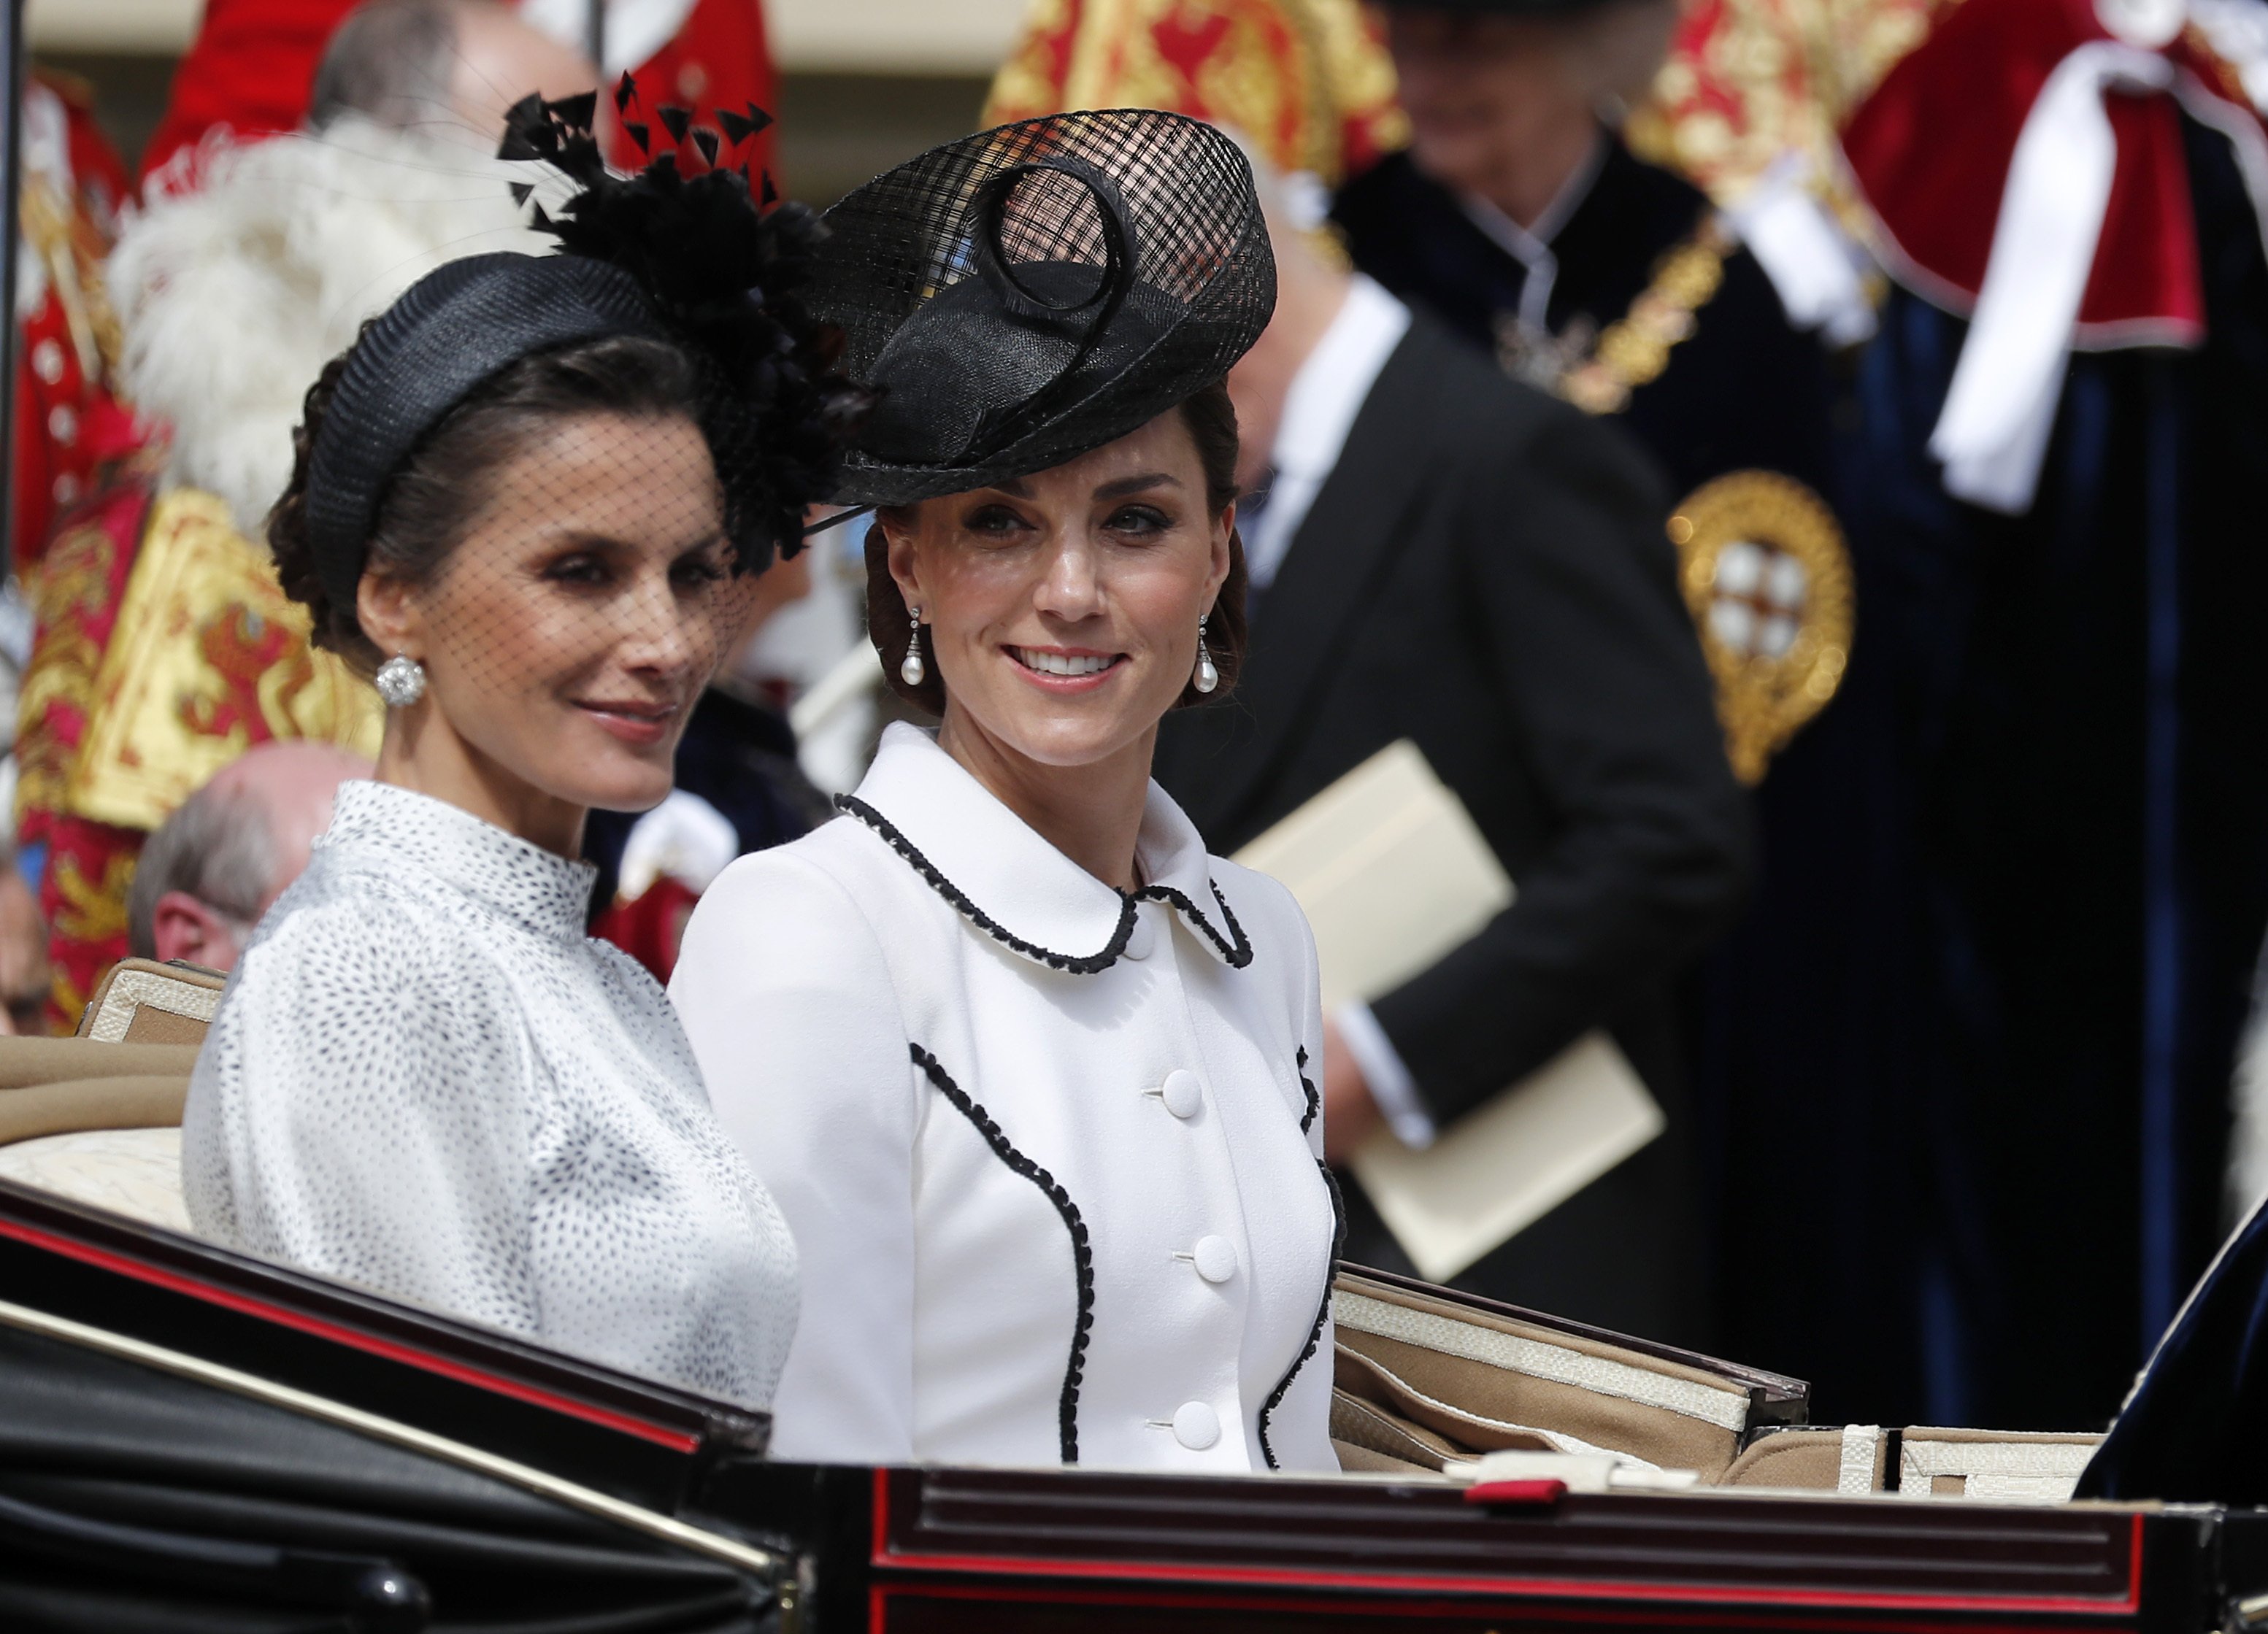 Kate Middleton humilia Letícia amb unes fotos d'uniforme: Felip mediocre